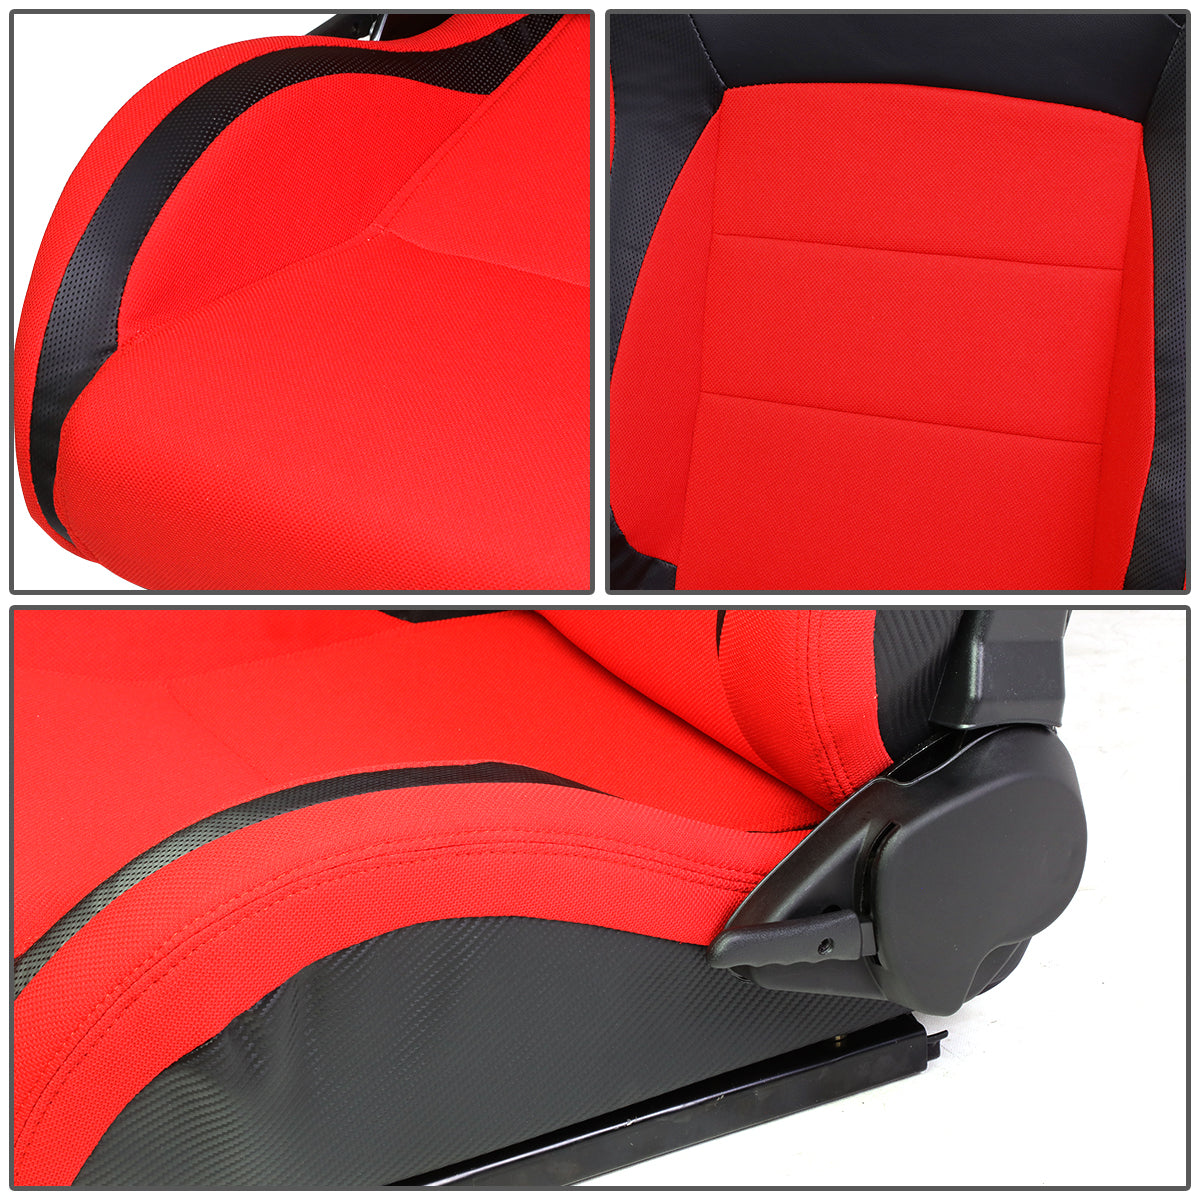 Racing Seats - Reclinable - Fabric - Pair